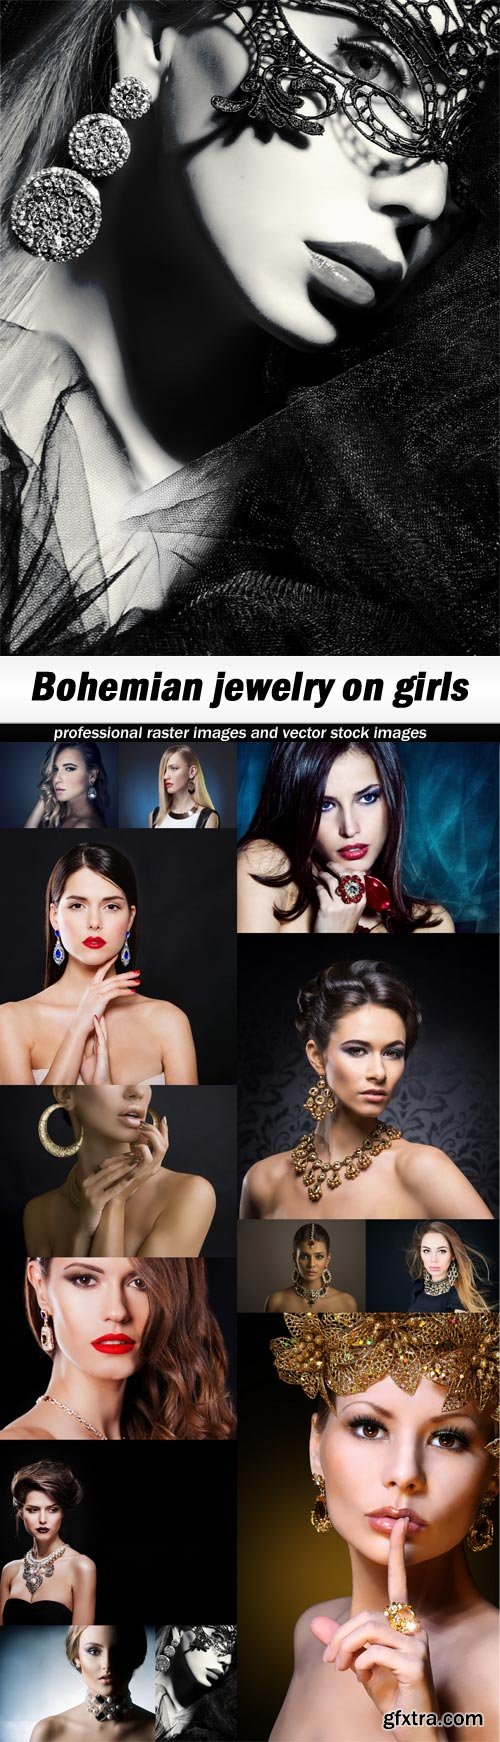 Bohemian jewelry on girls